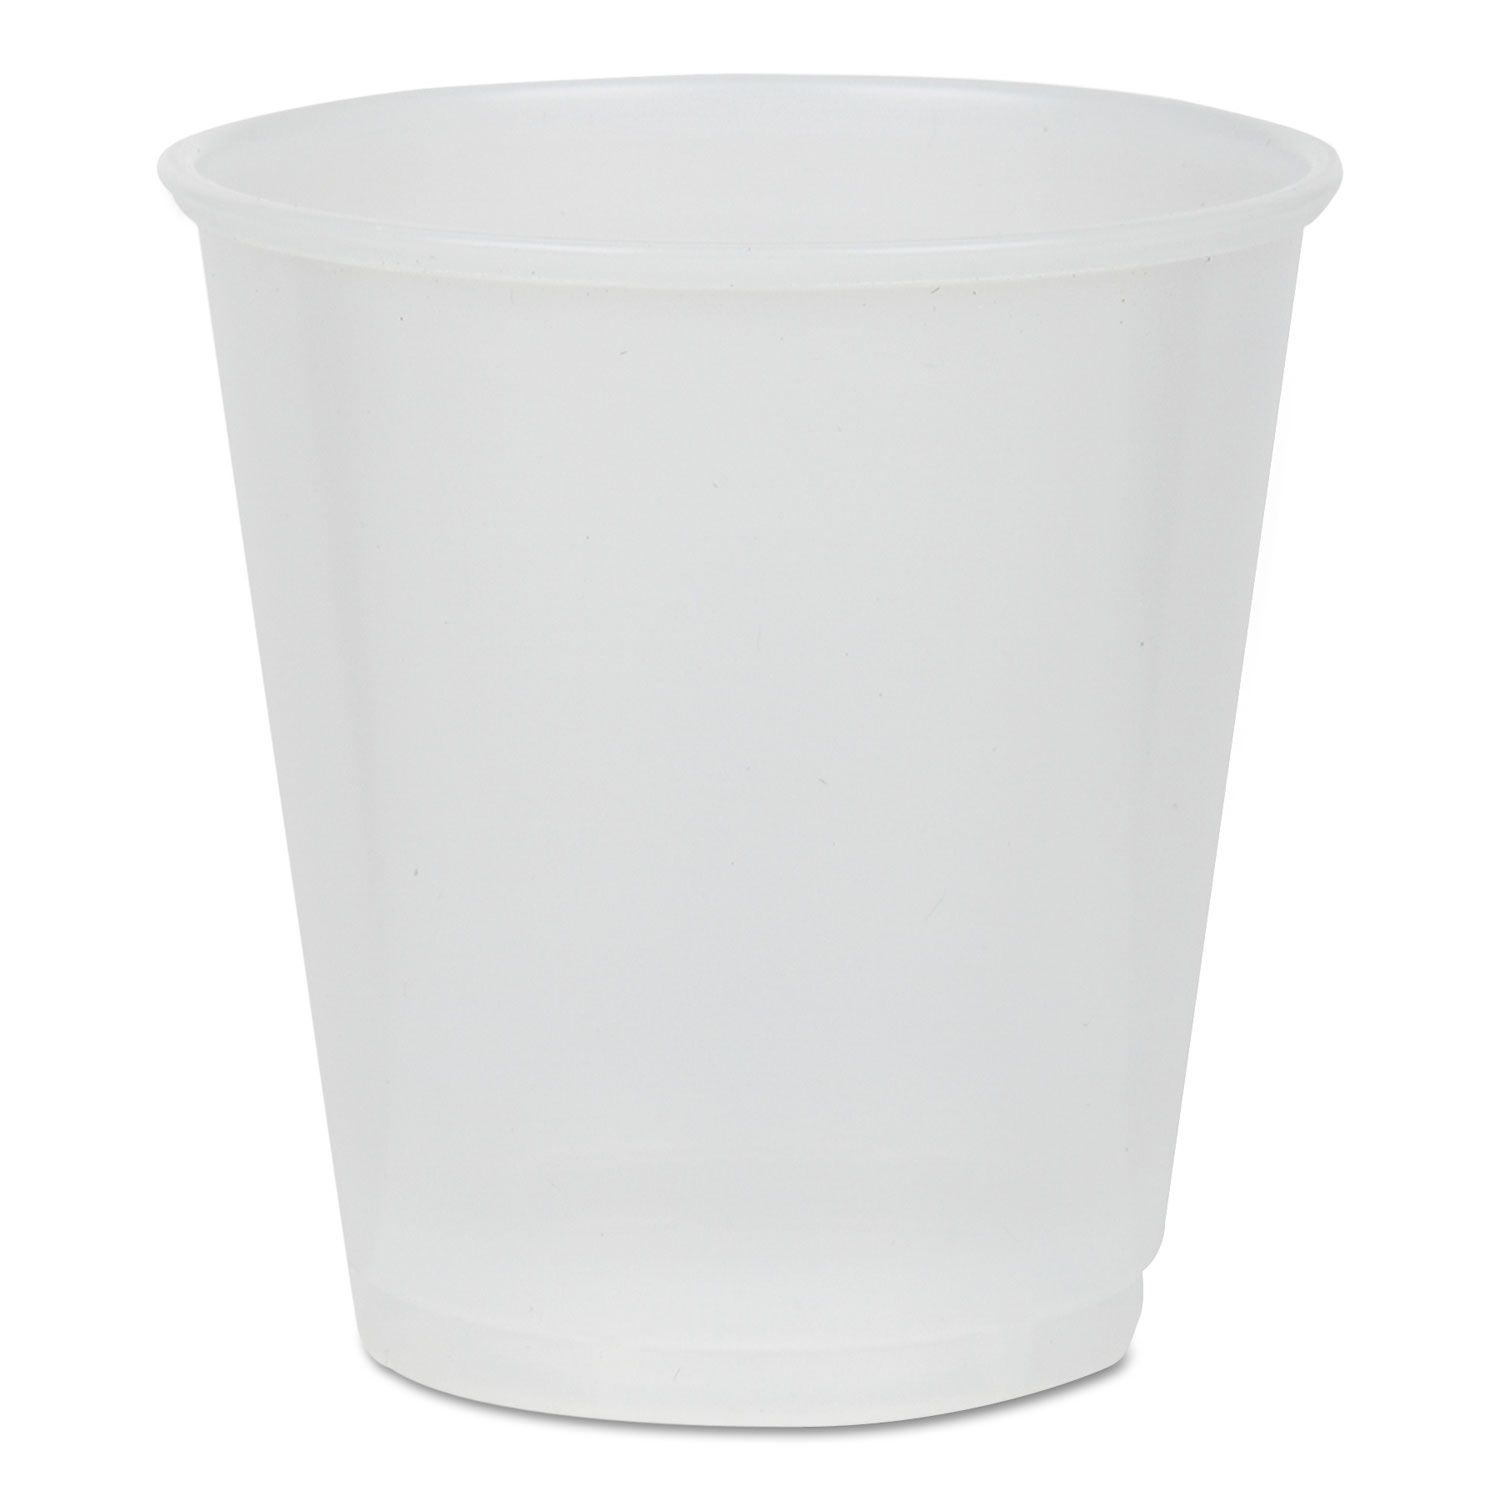  Pactiv YE3 Translucent Plastic Cups, 3 oz, 80/Pack, 30 Packs/Carton (PCTYE3) 